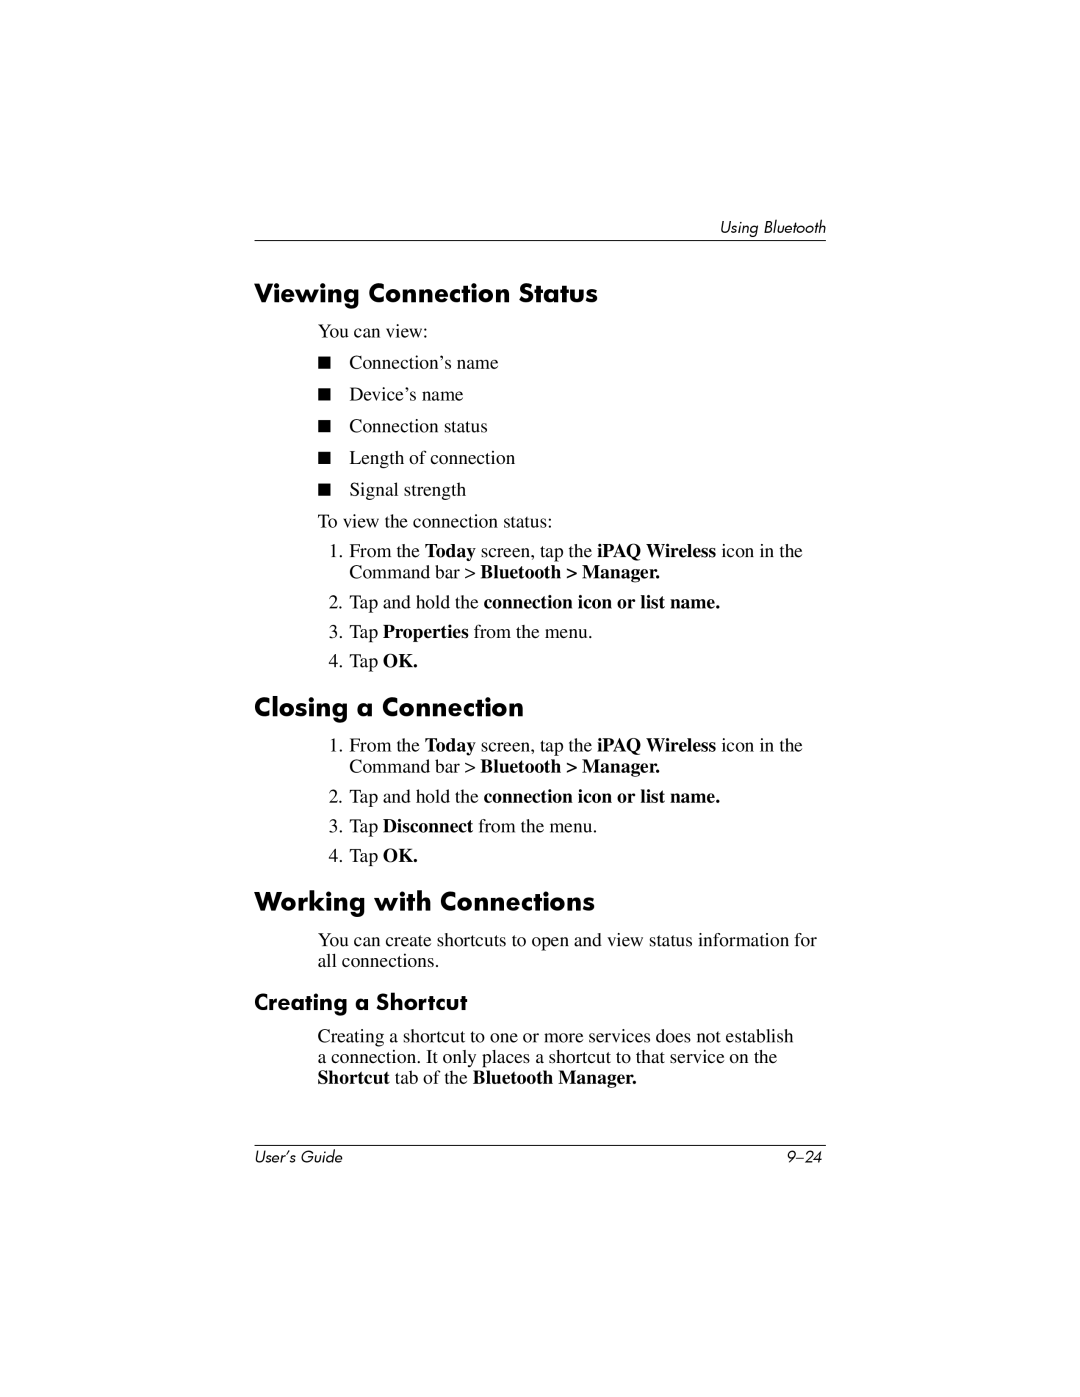 HP hx4700 manual Viewing Connection Status, Closing a Connection, Working with Connections, Creating a Shortcut 